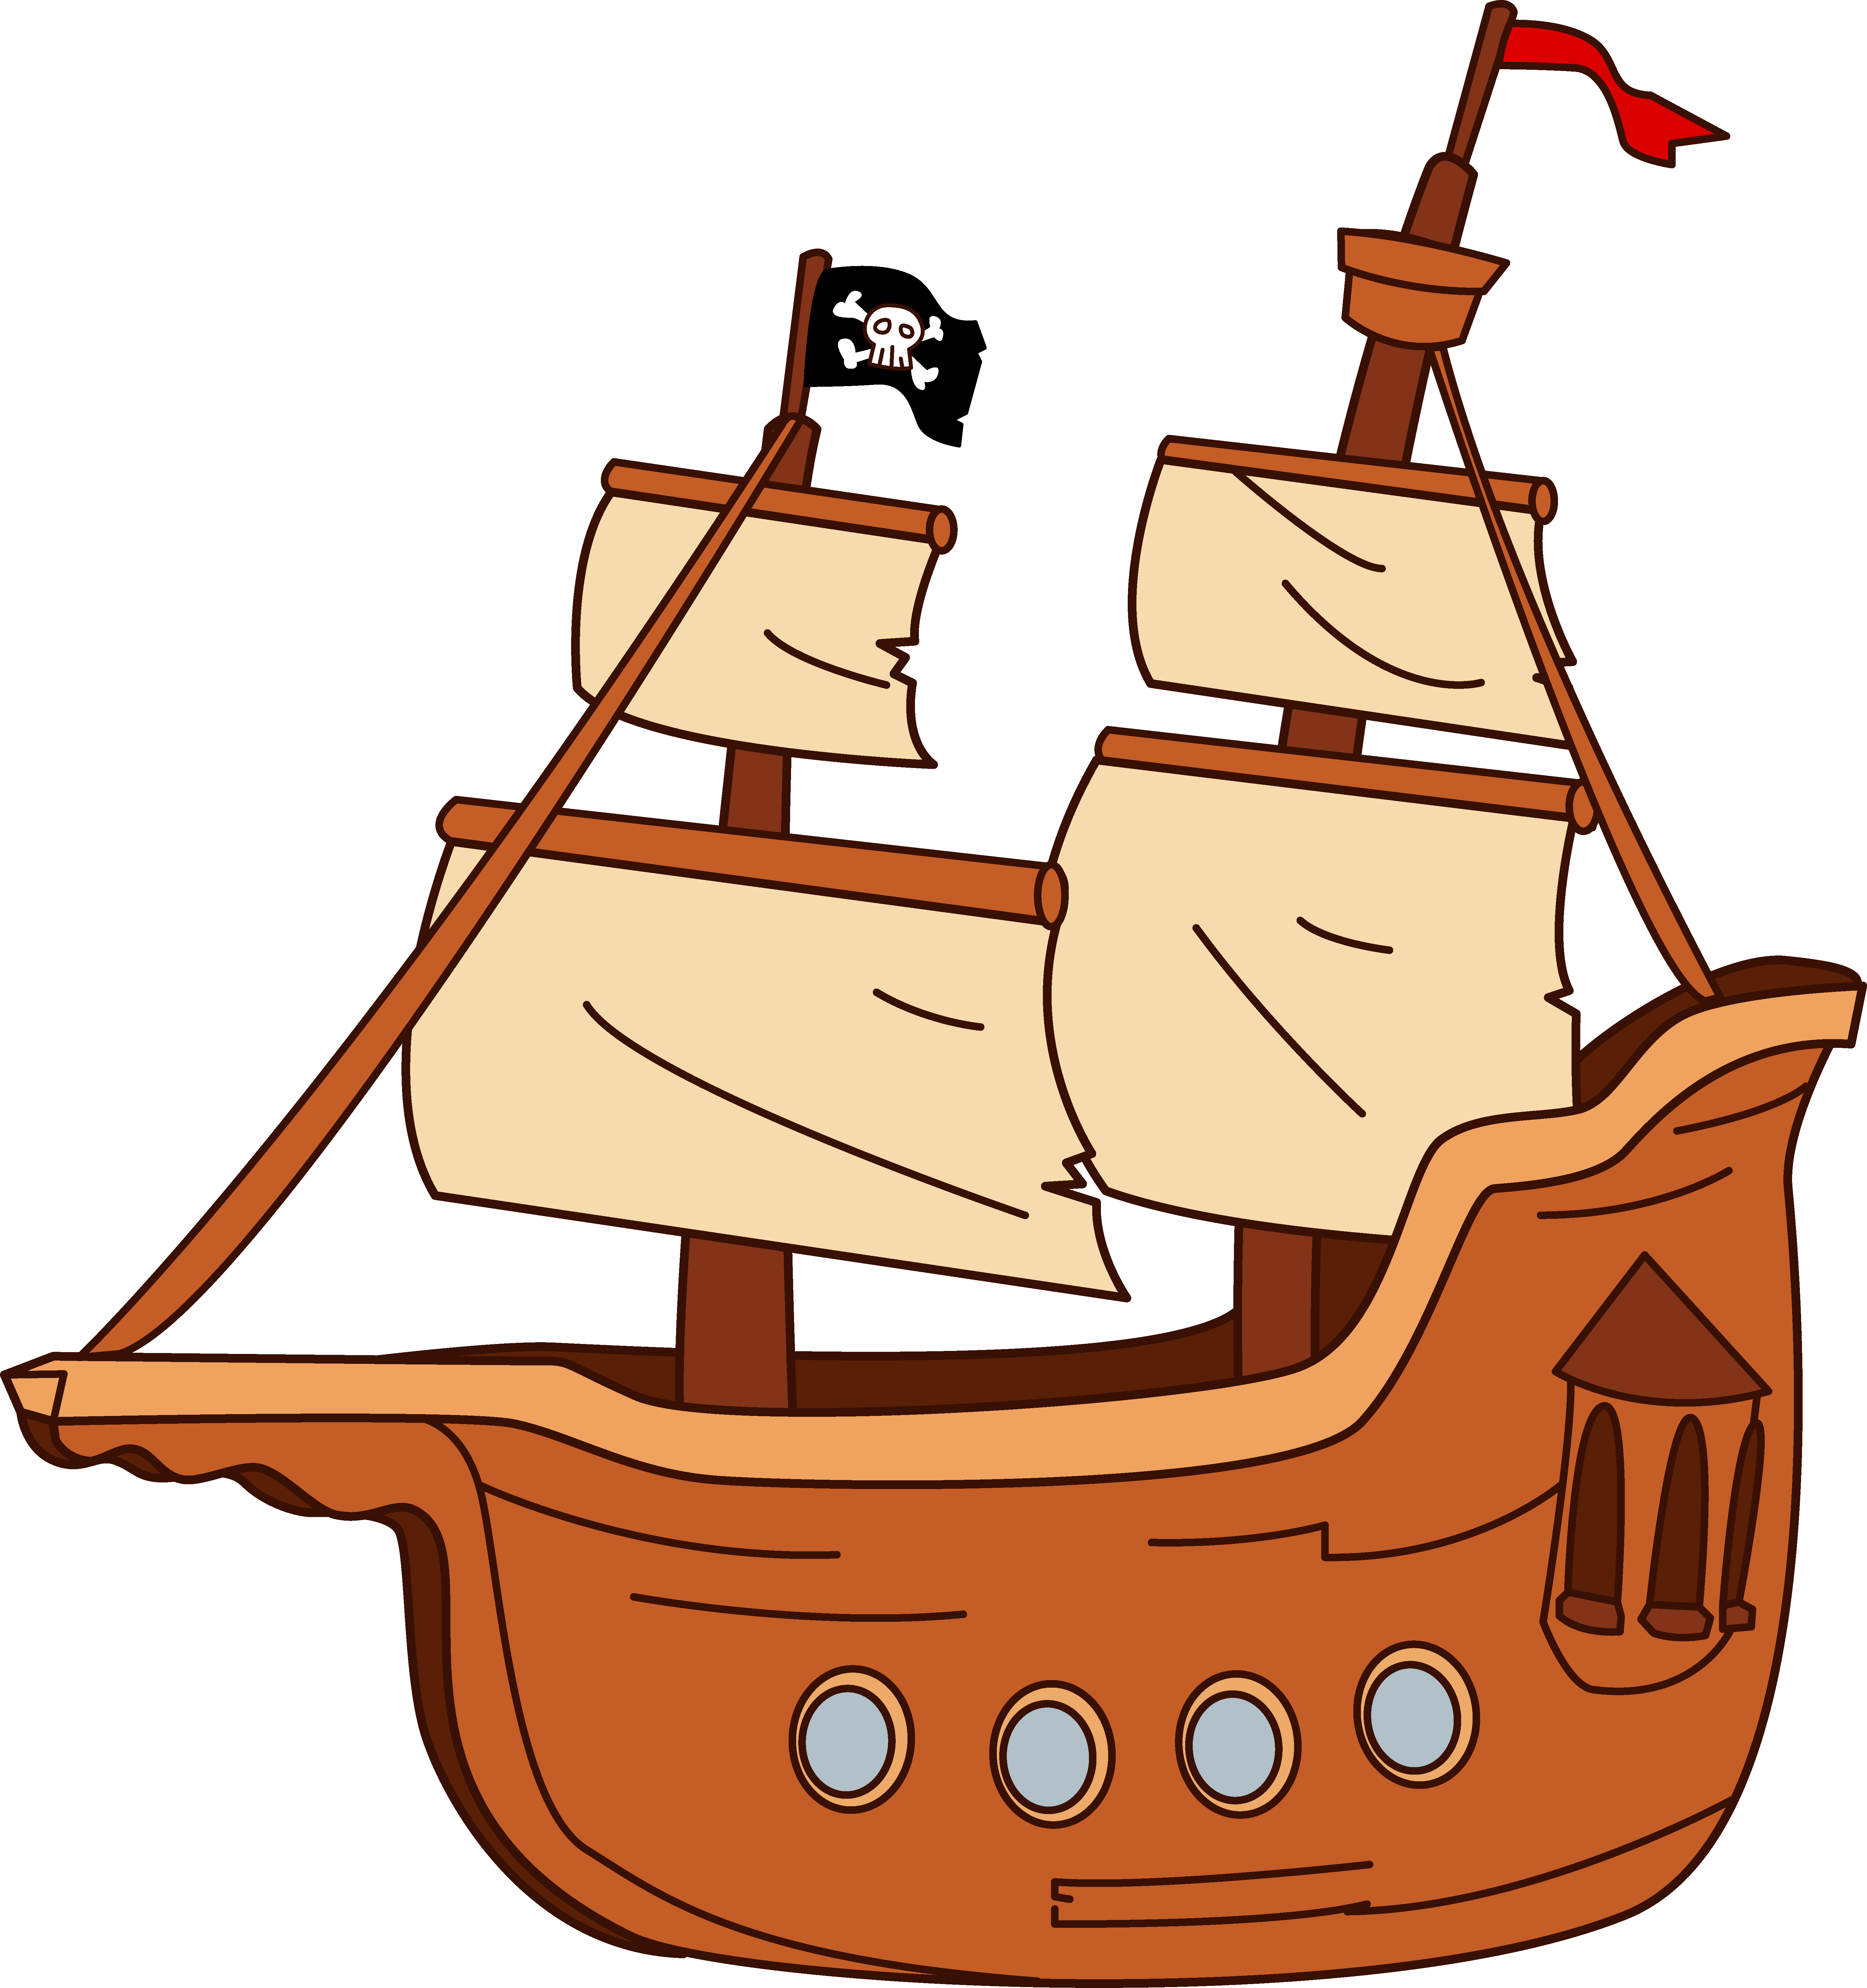 Ship Cartoon Images : Editable Cartoon Illustration Of Pirate Ship High ...